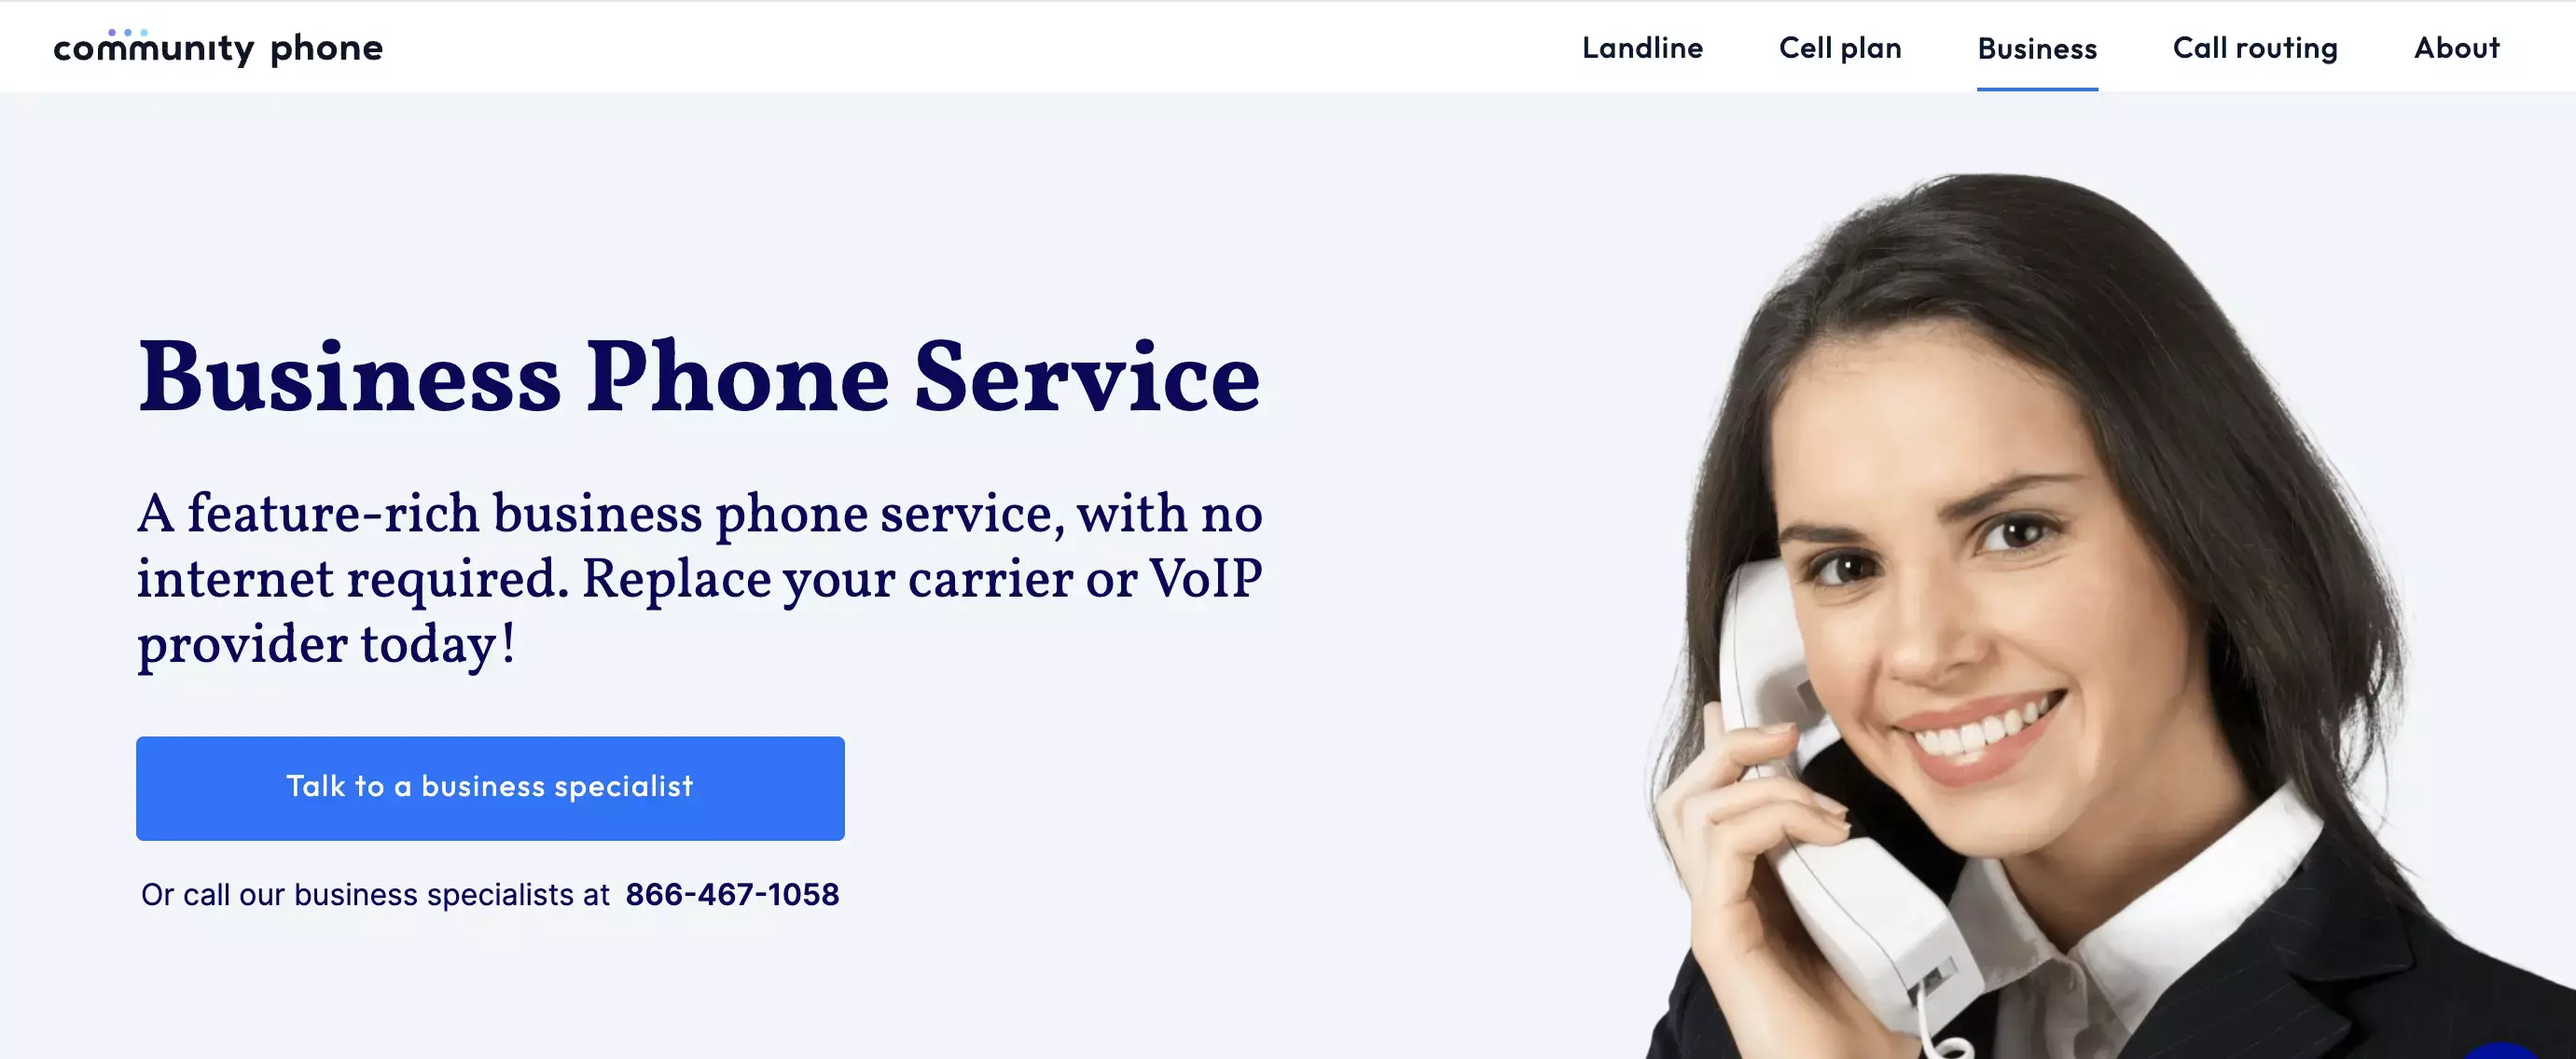 Image of Community Phone business landline service